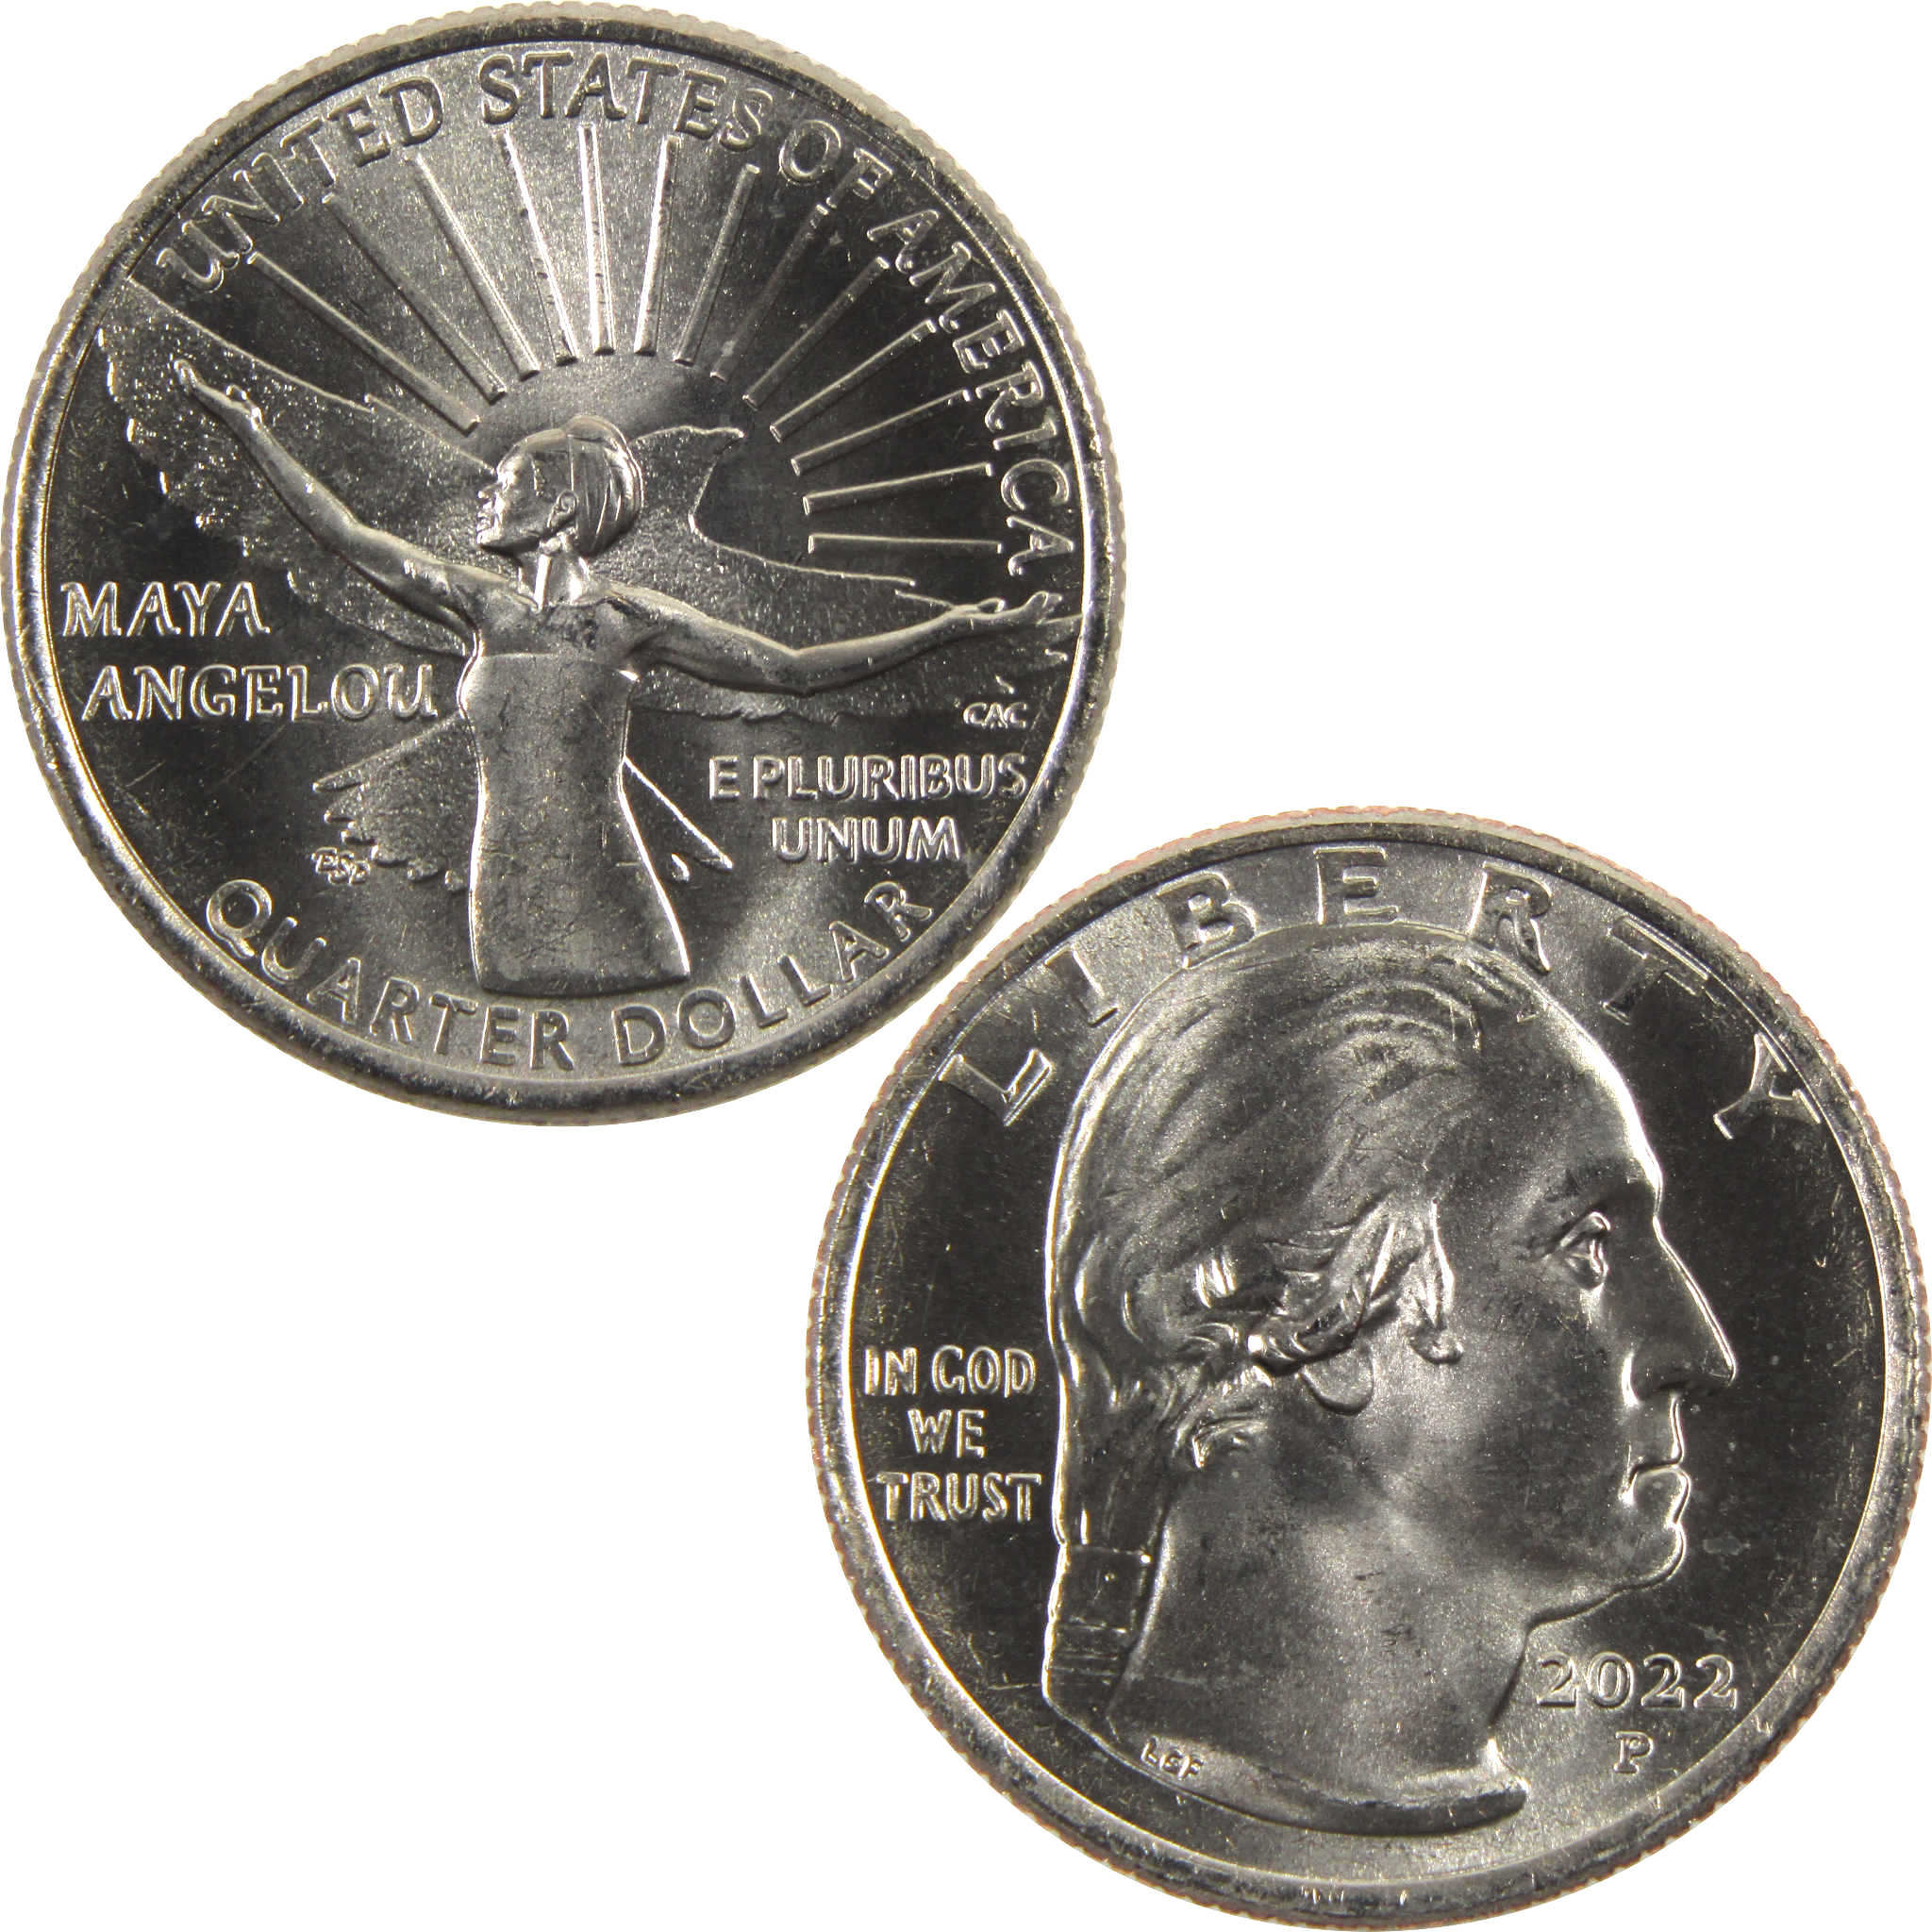 2022 P Maya Angelou American Women Quarter BU Uncirculated Clad Coin